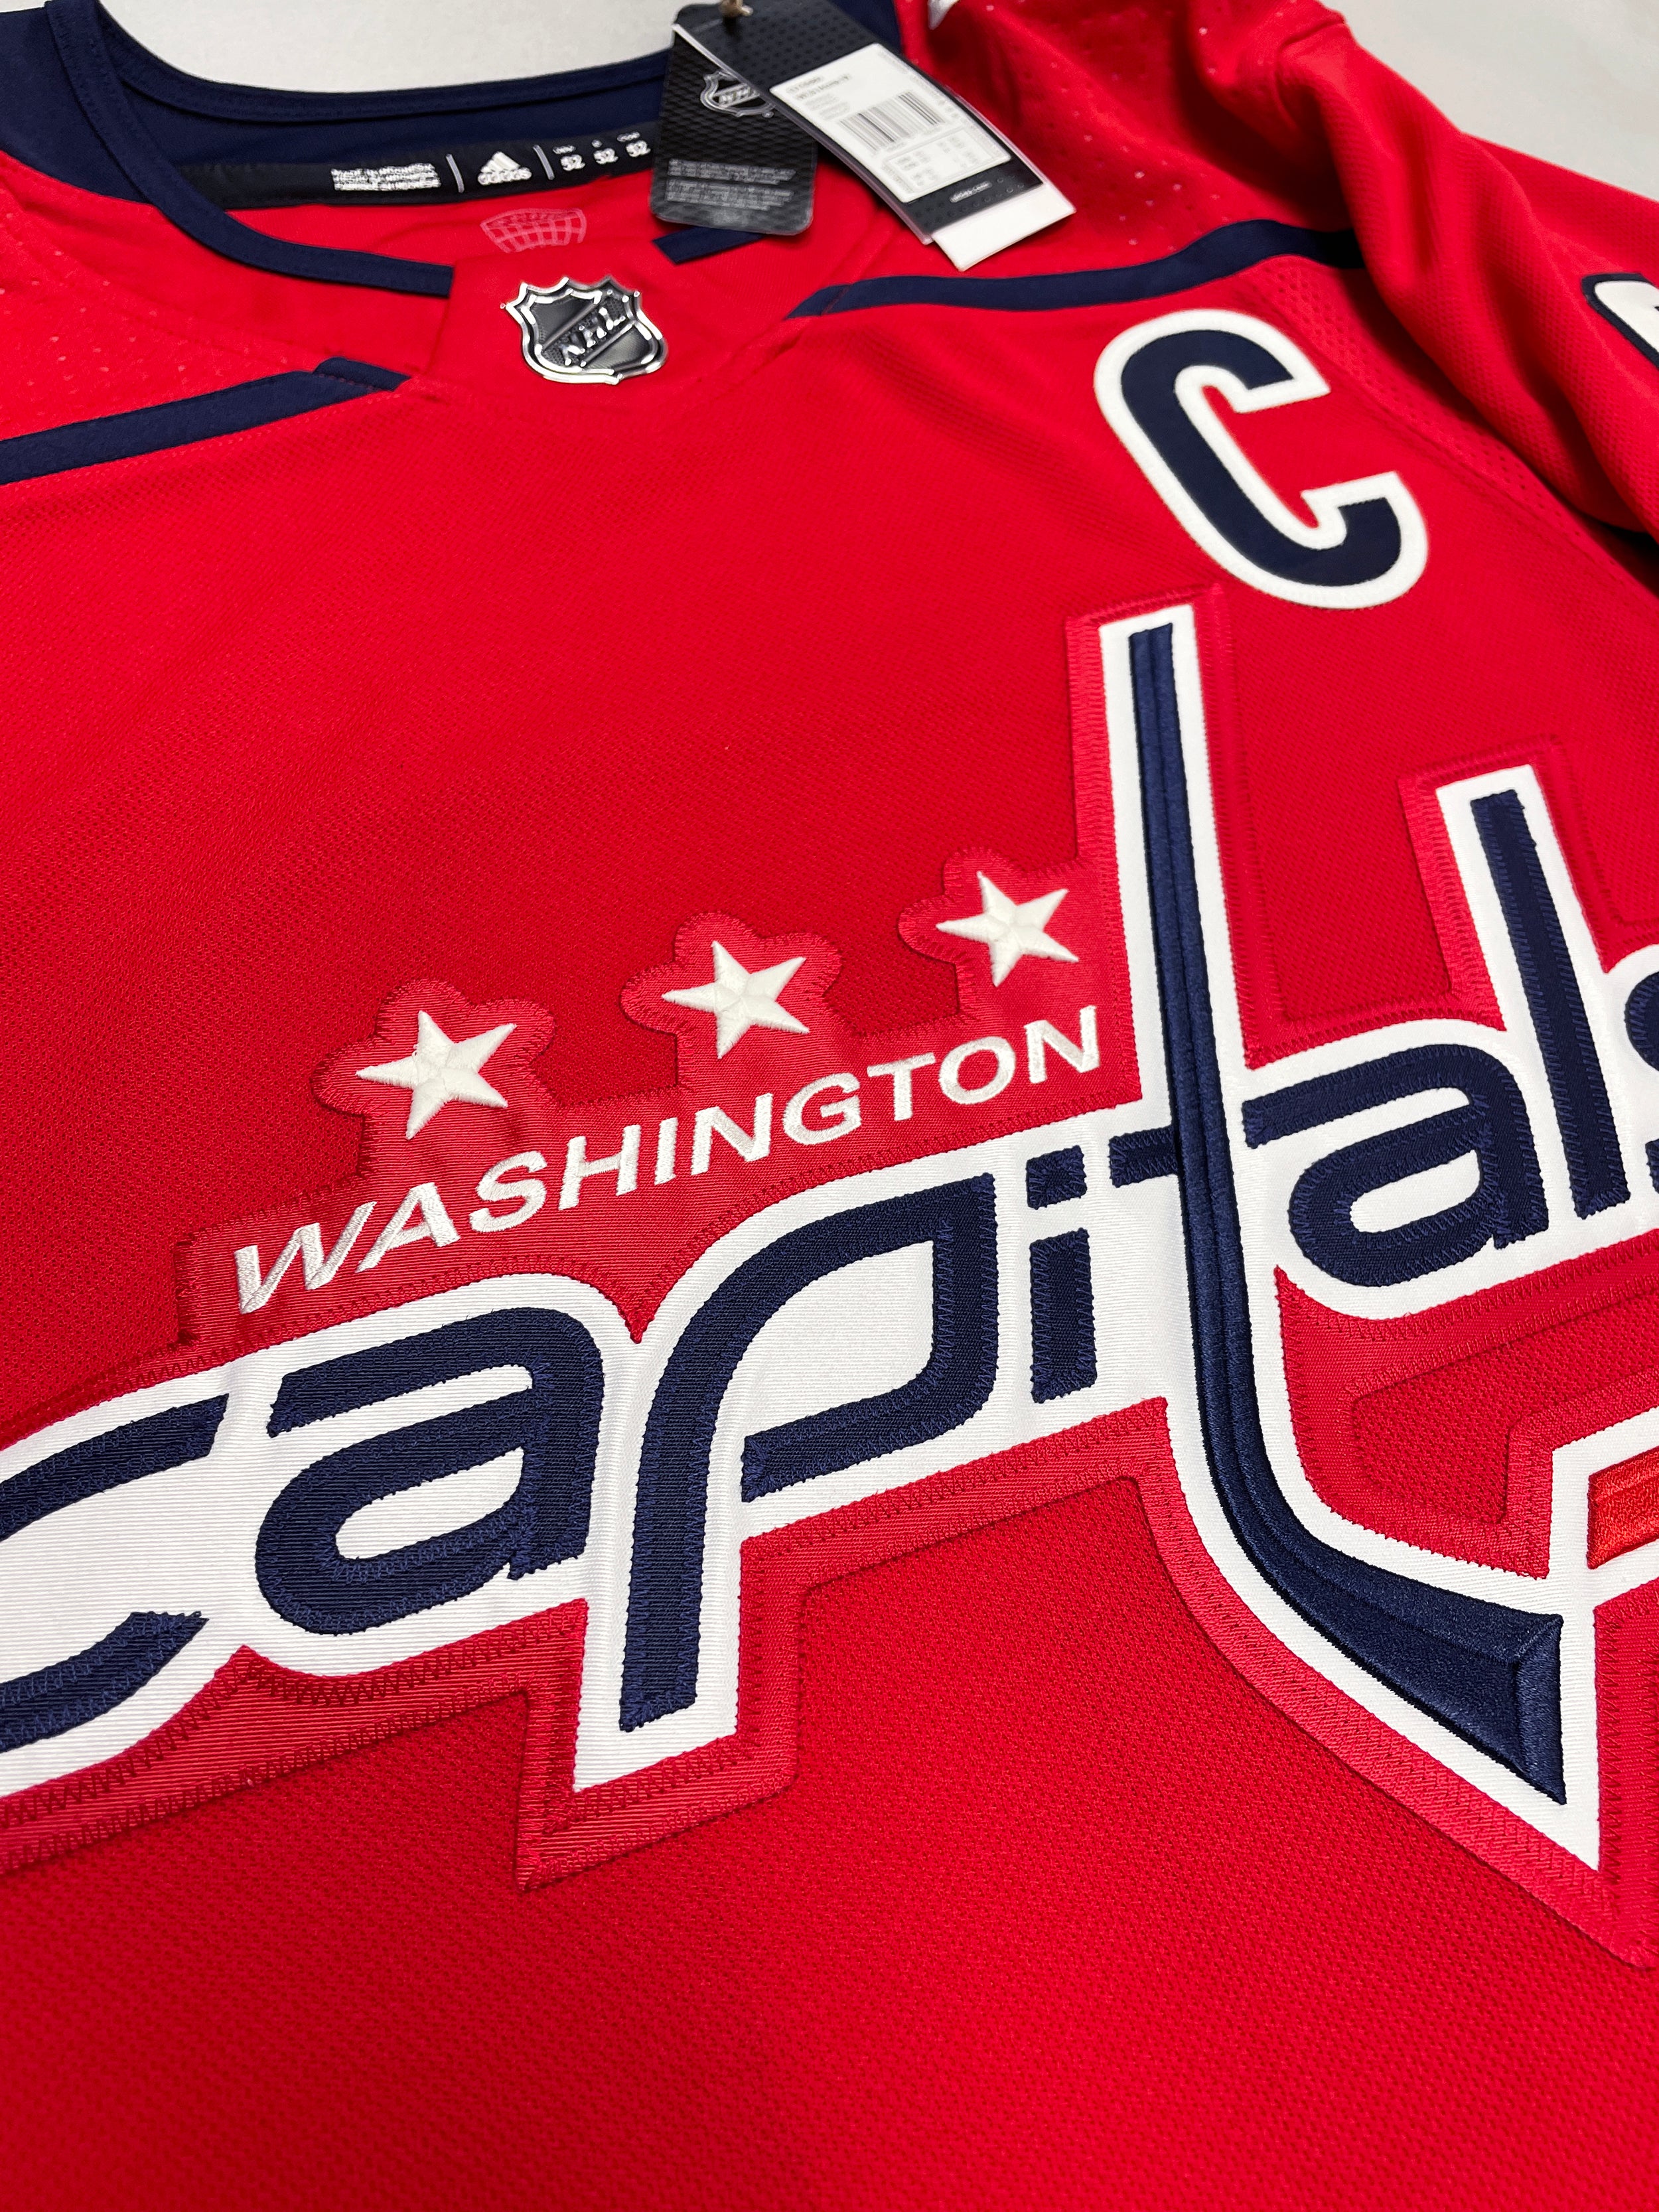 Washington Capitals Jersey - NHL Jerseys